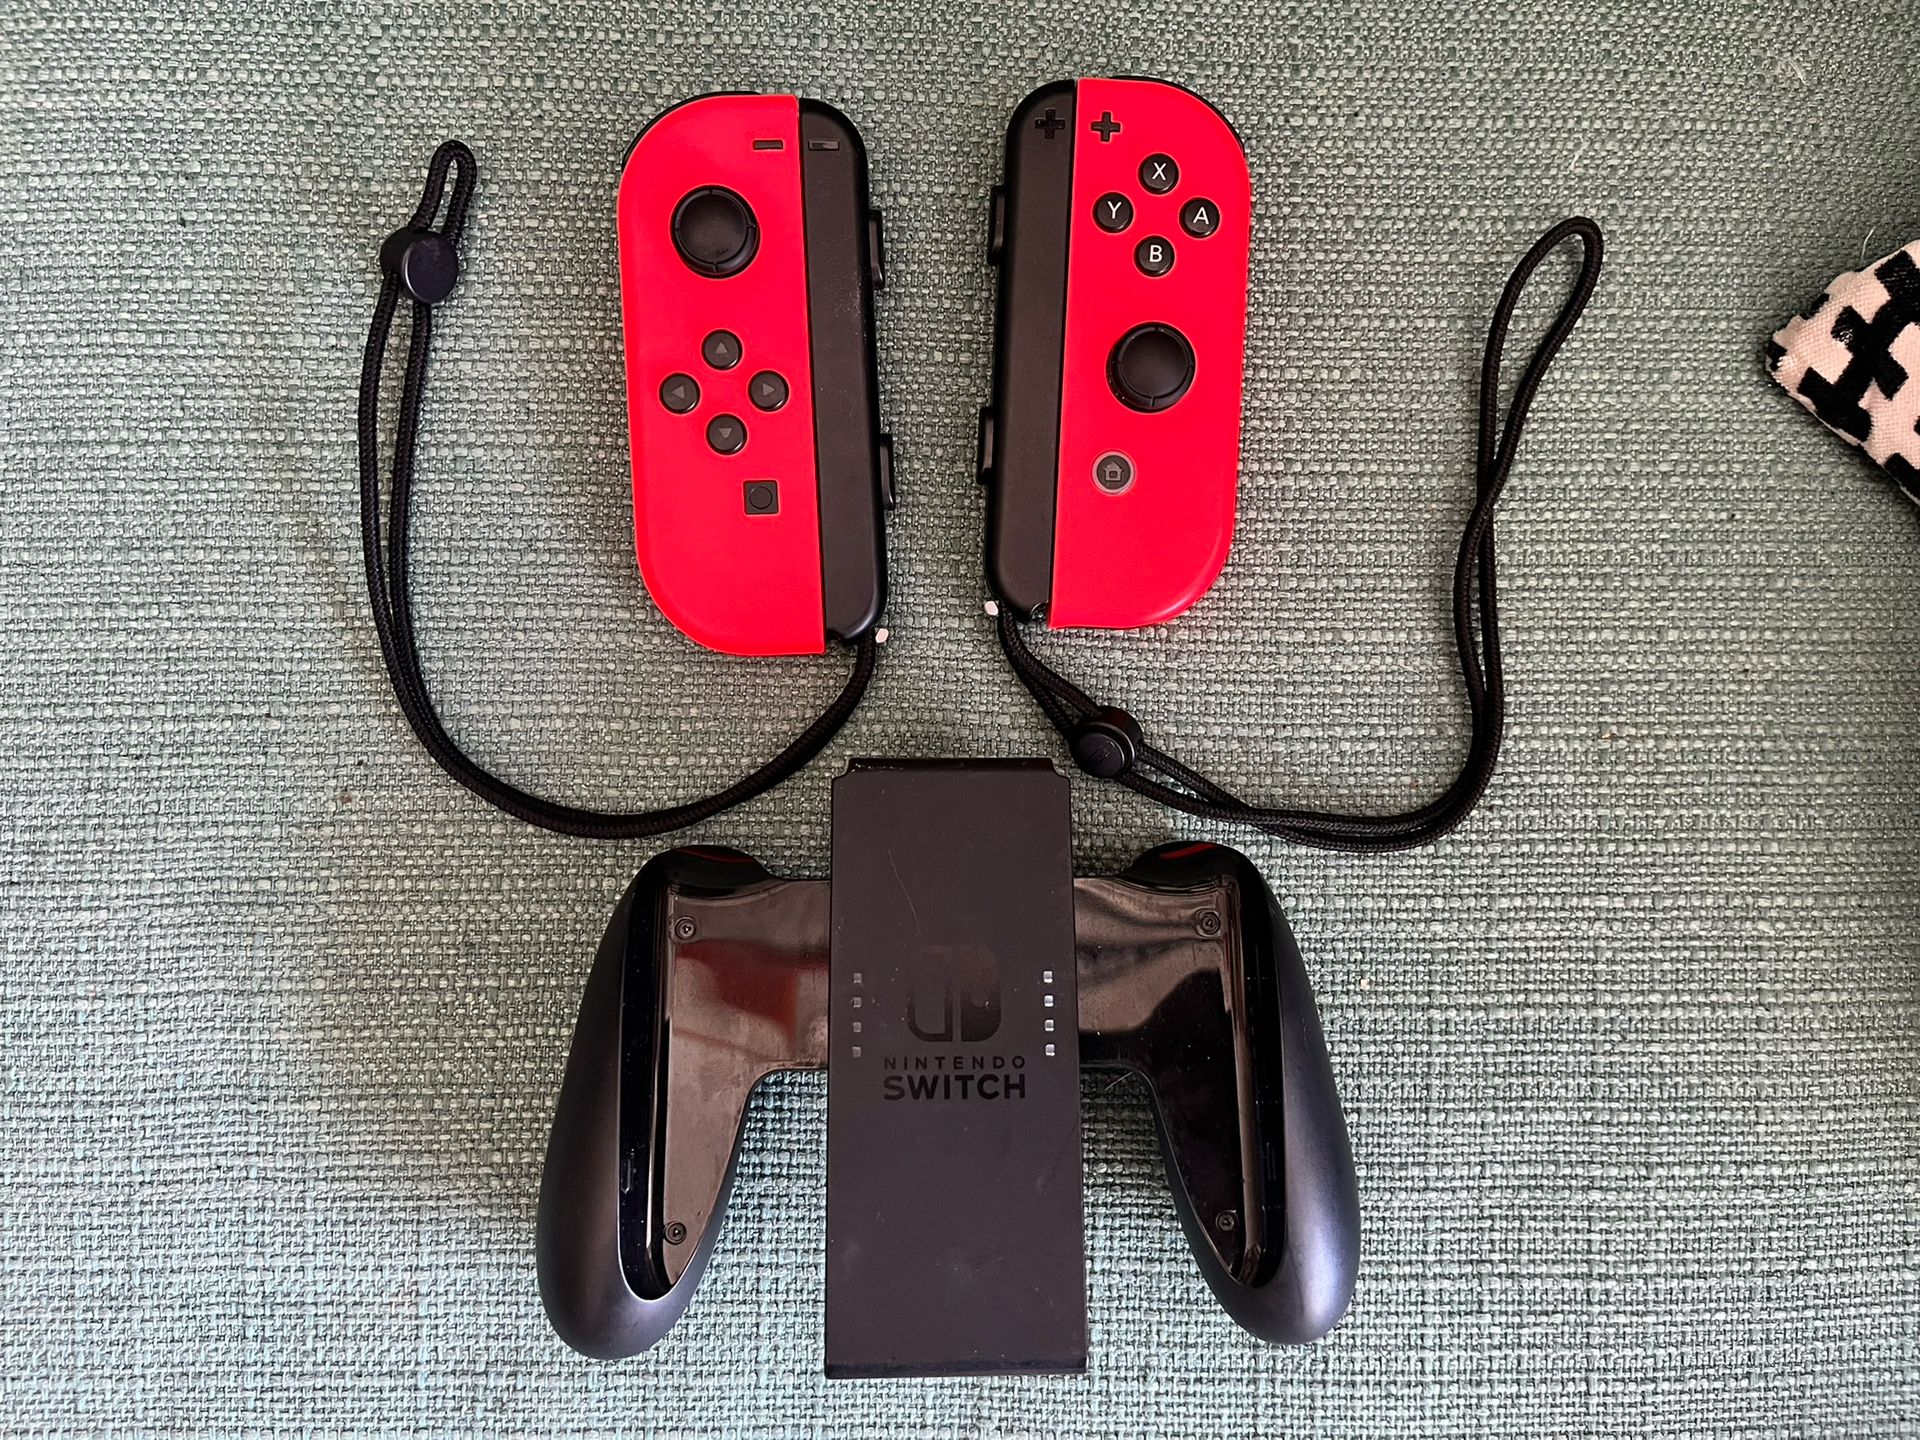 Nintendo Switch Joycon set with wrist straps and controller